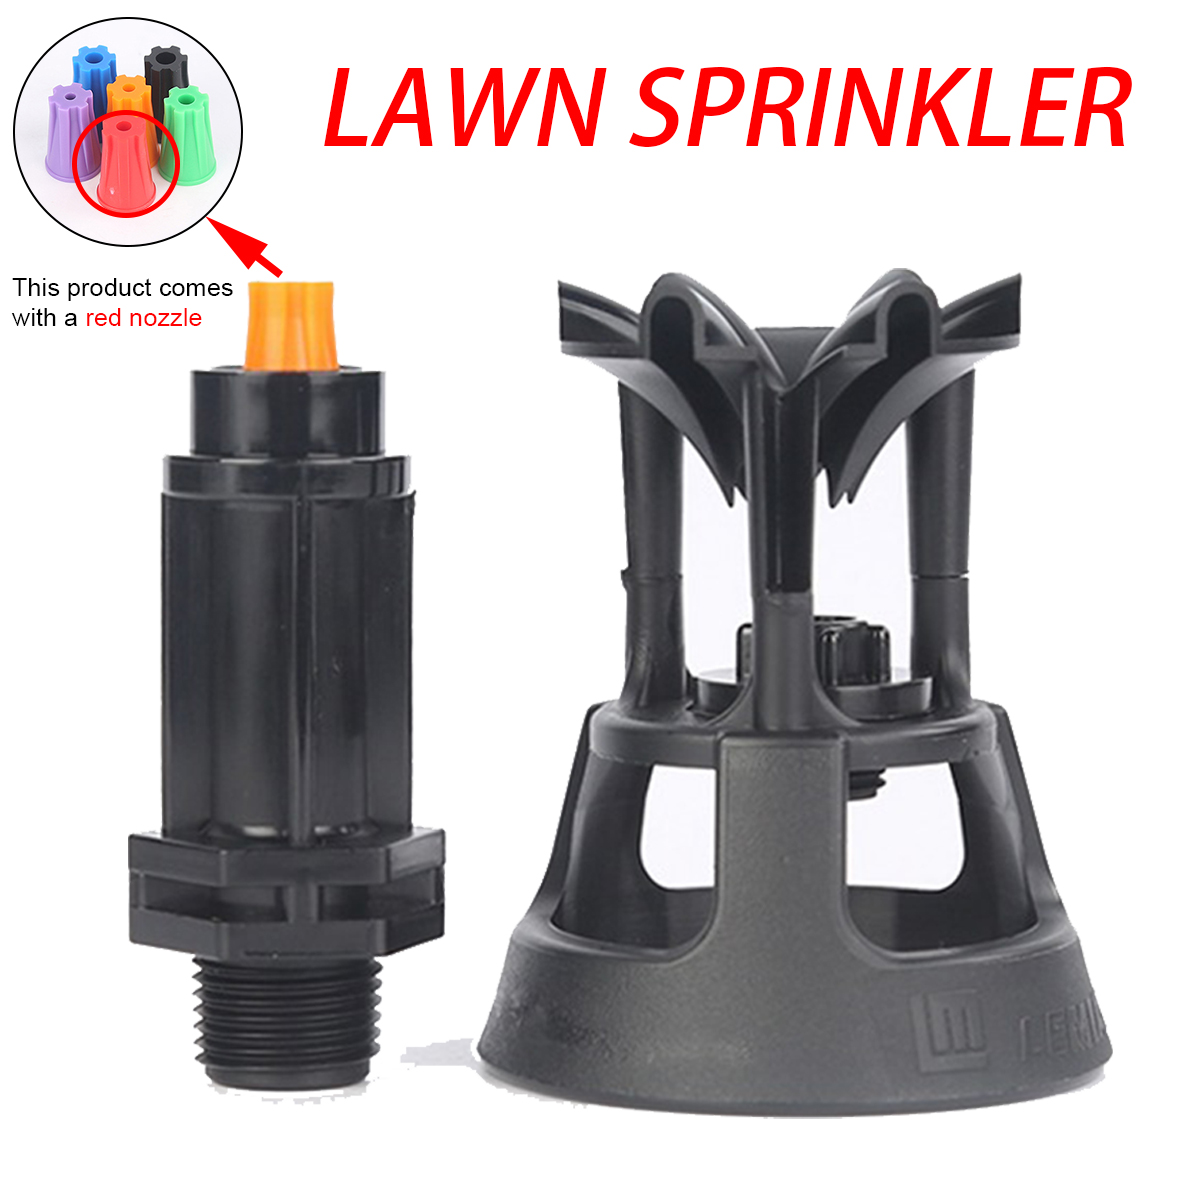 Lawn-Sprinkler-Nozzle-Garden-Irrigation-Water-Sprinkl-Sprayer-Plastic-Rotating-1706402